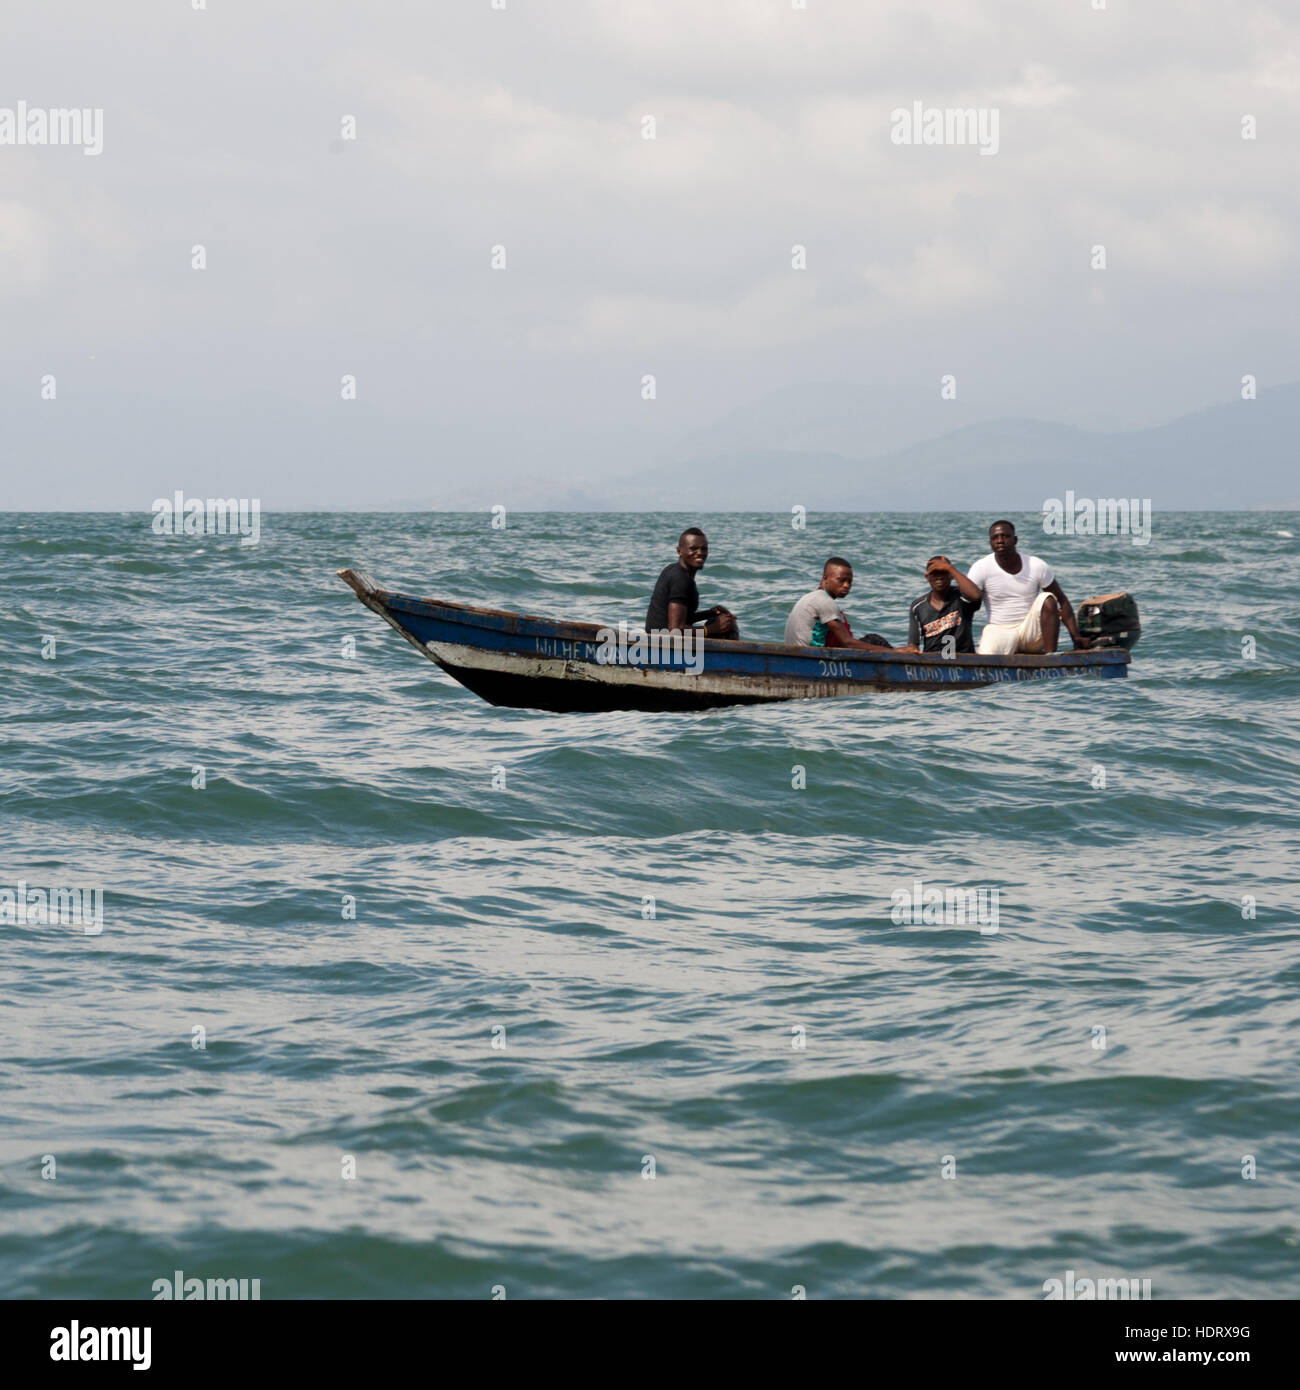 On the ocean off shore Sierra Leone Stock Photo